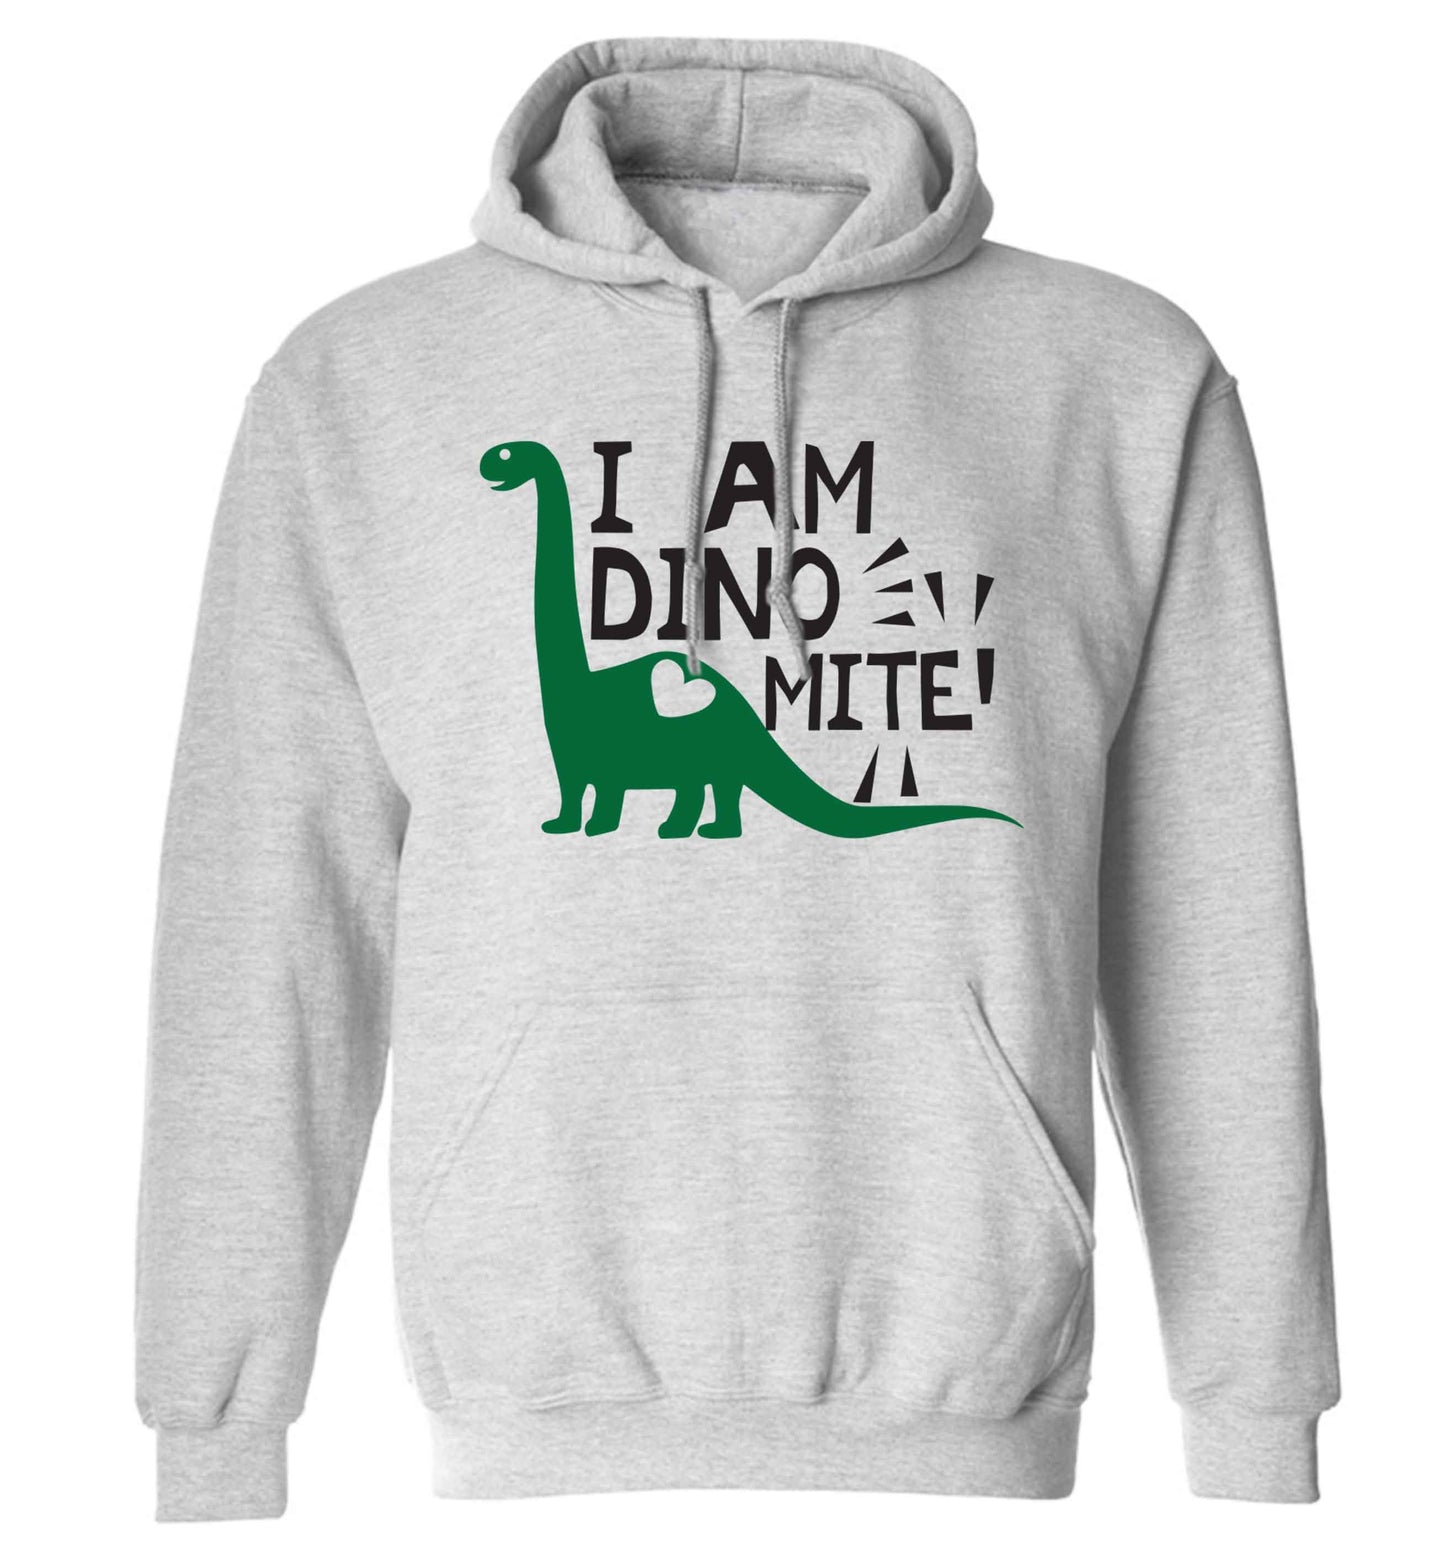 I am dinomite! adults unisex grey hoodie 2XL